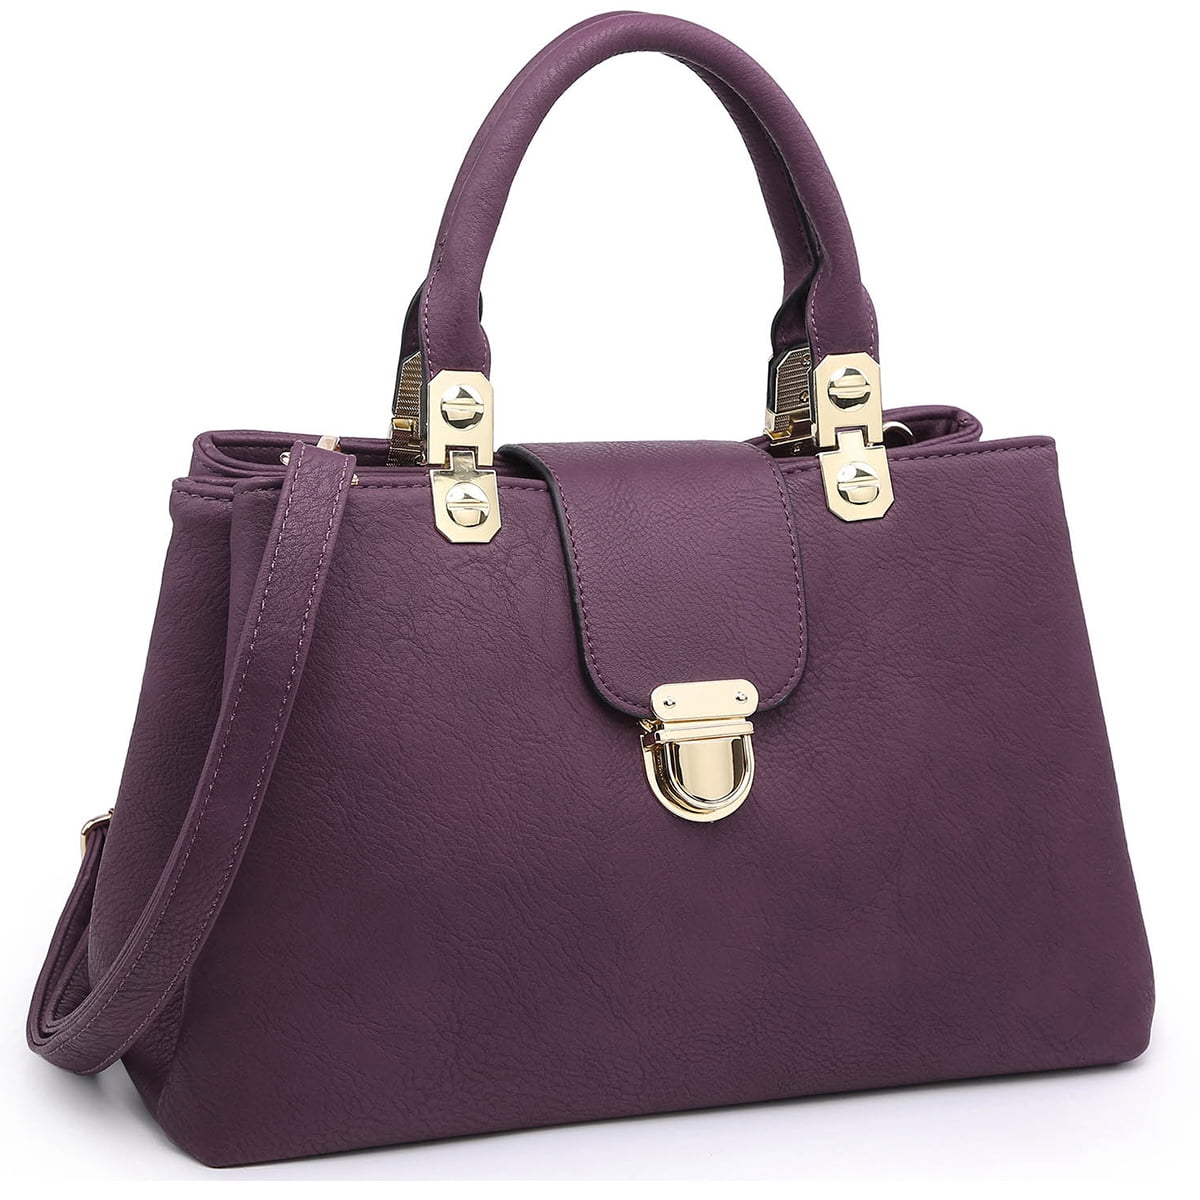 Dasein Women Satchel Handbags Top Handle Purse Medium Tote Bag Vegan Leather Shoulder Bag 